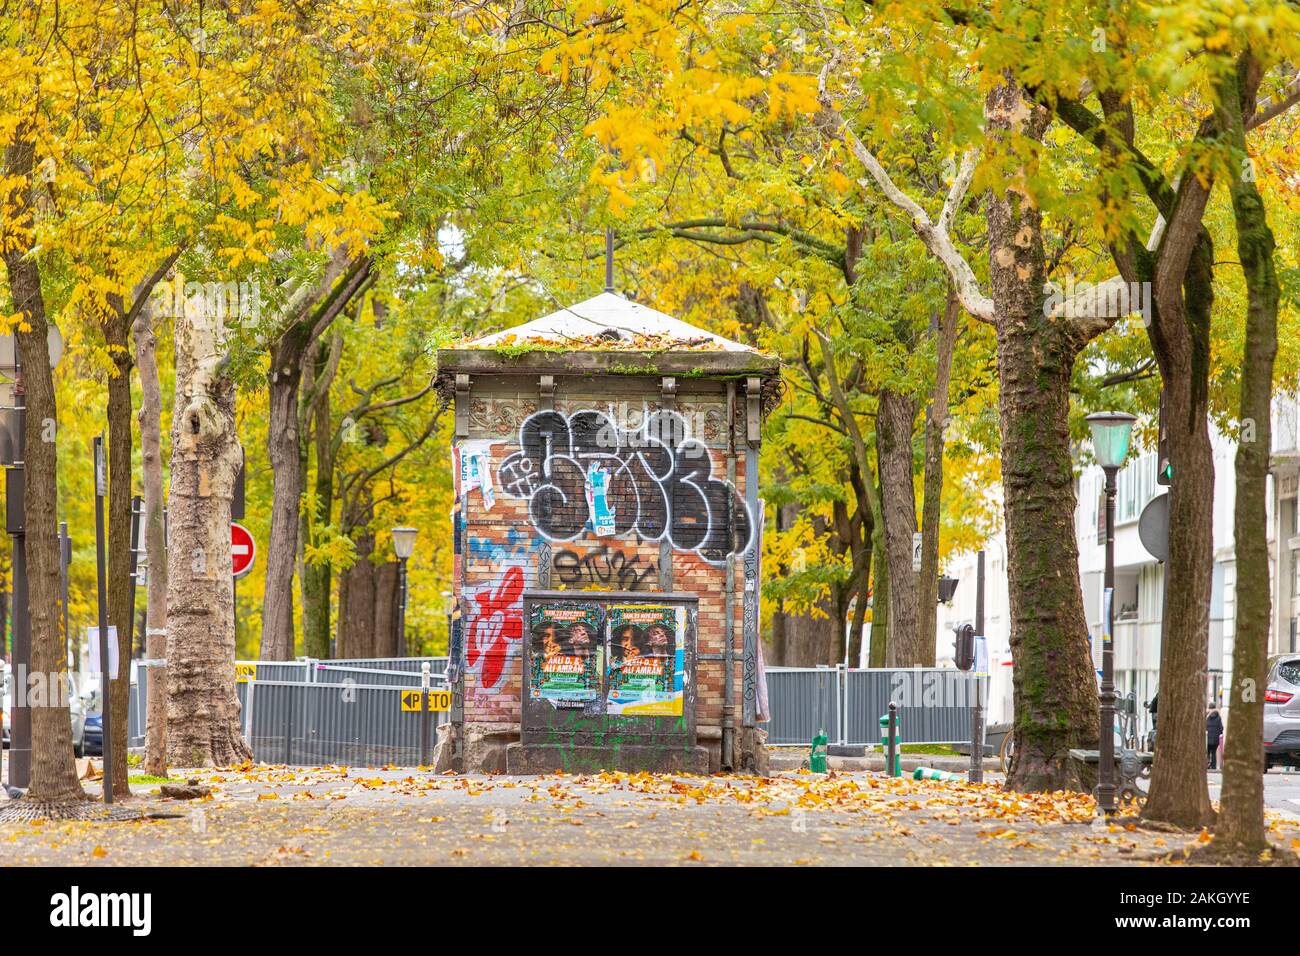 France, Paris, boulevard de Charonne, the alley in autumn Stock Photo